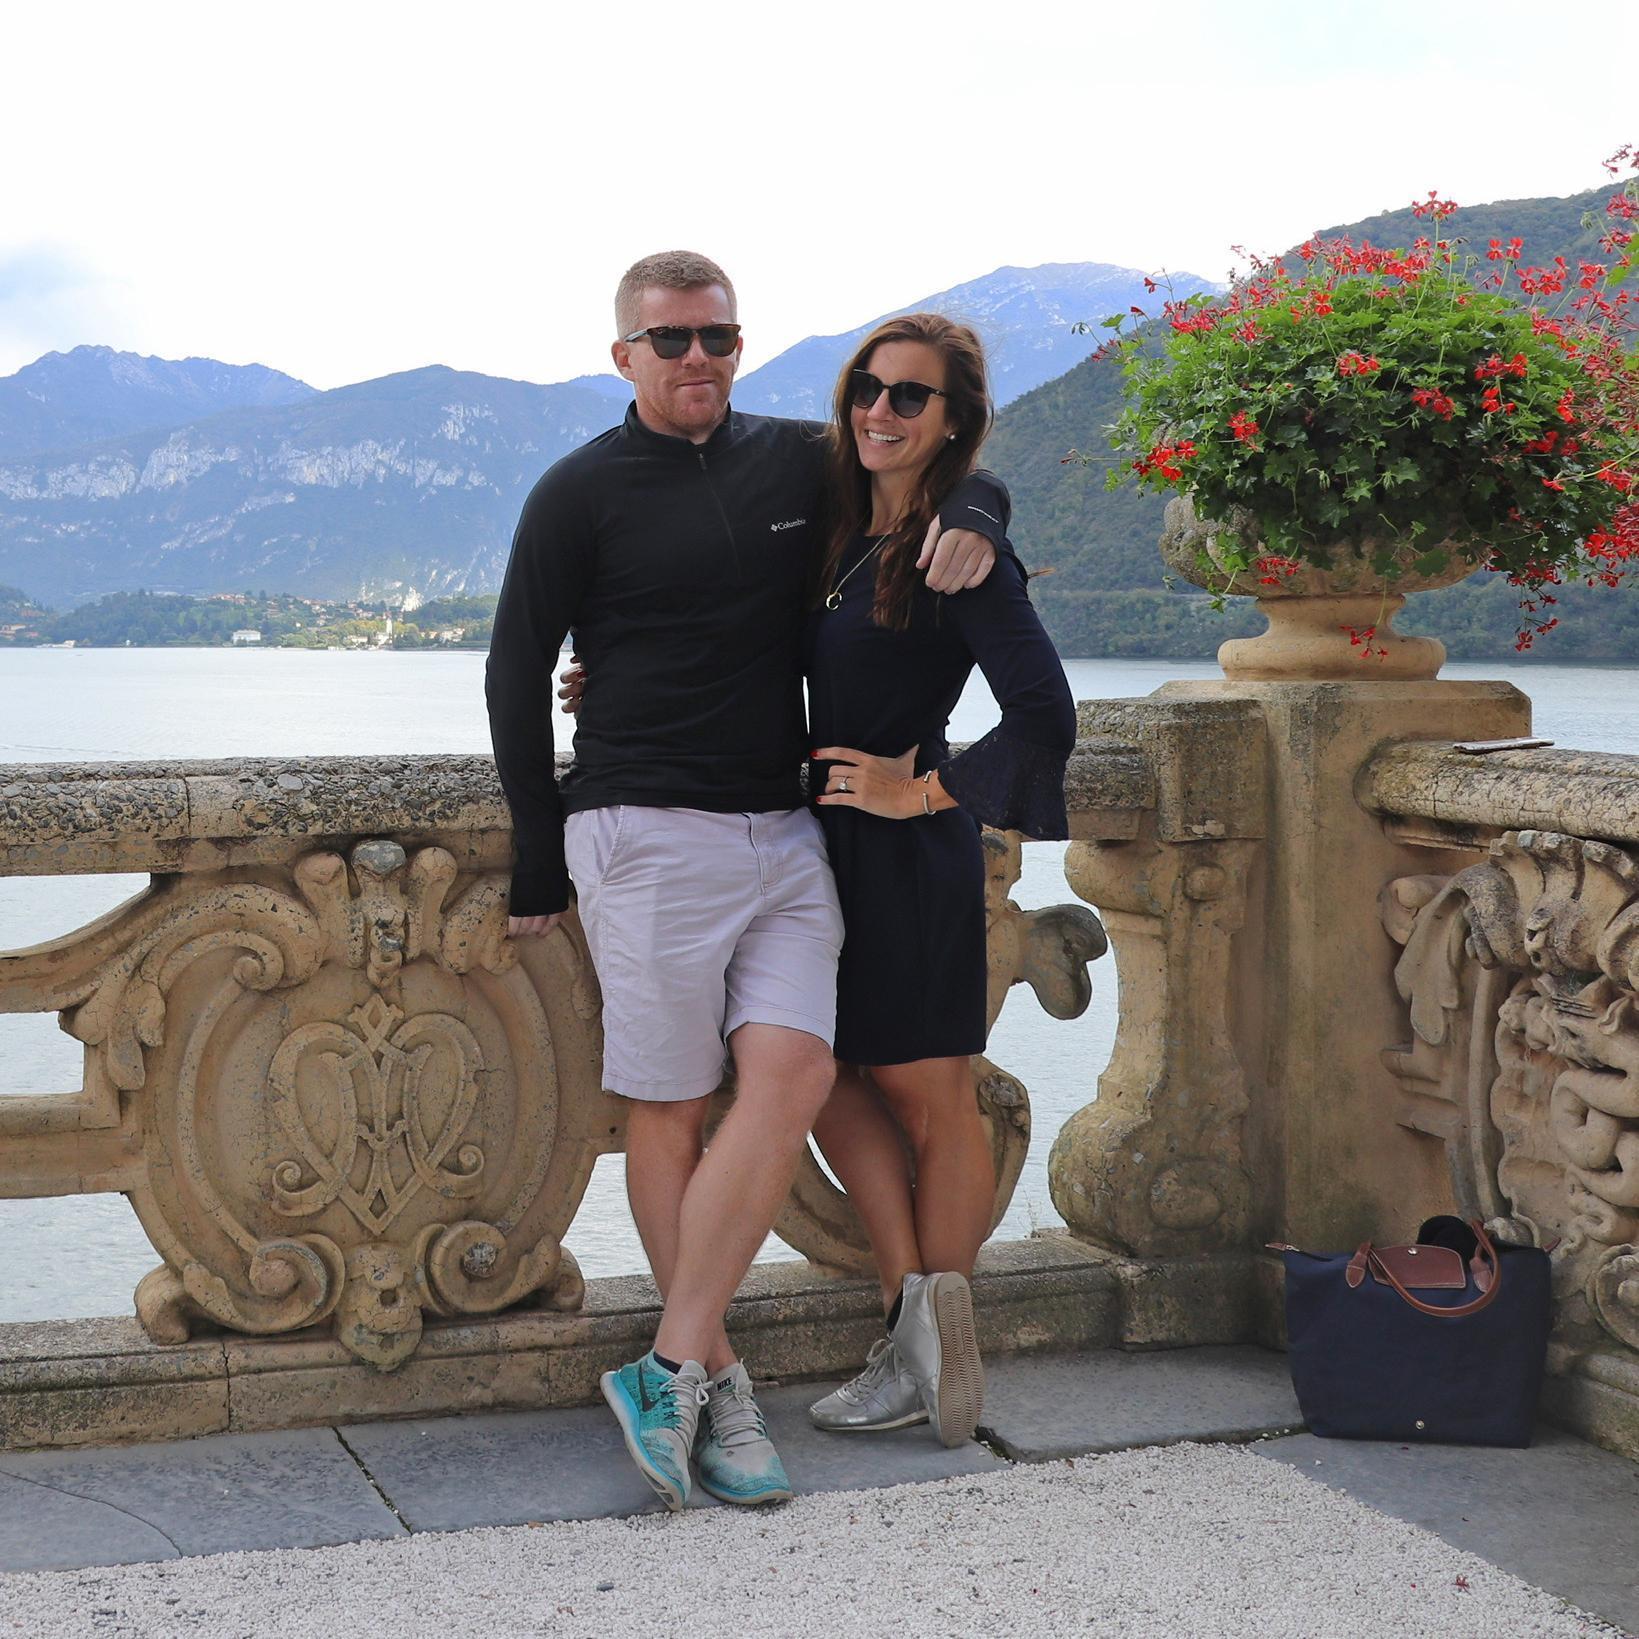 At Villa Balbiano in Lake Como